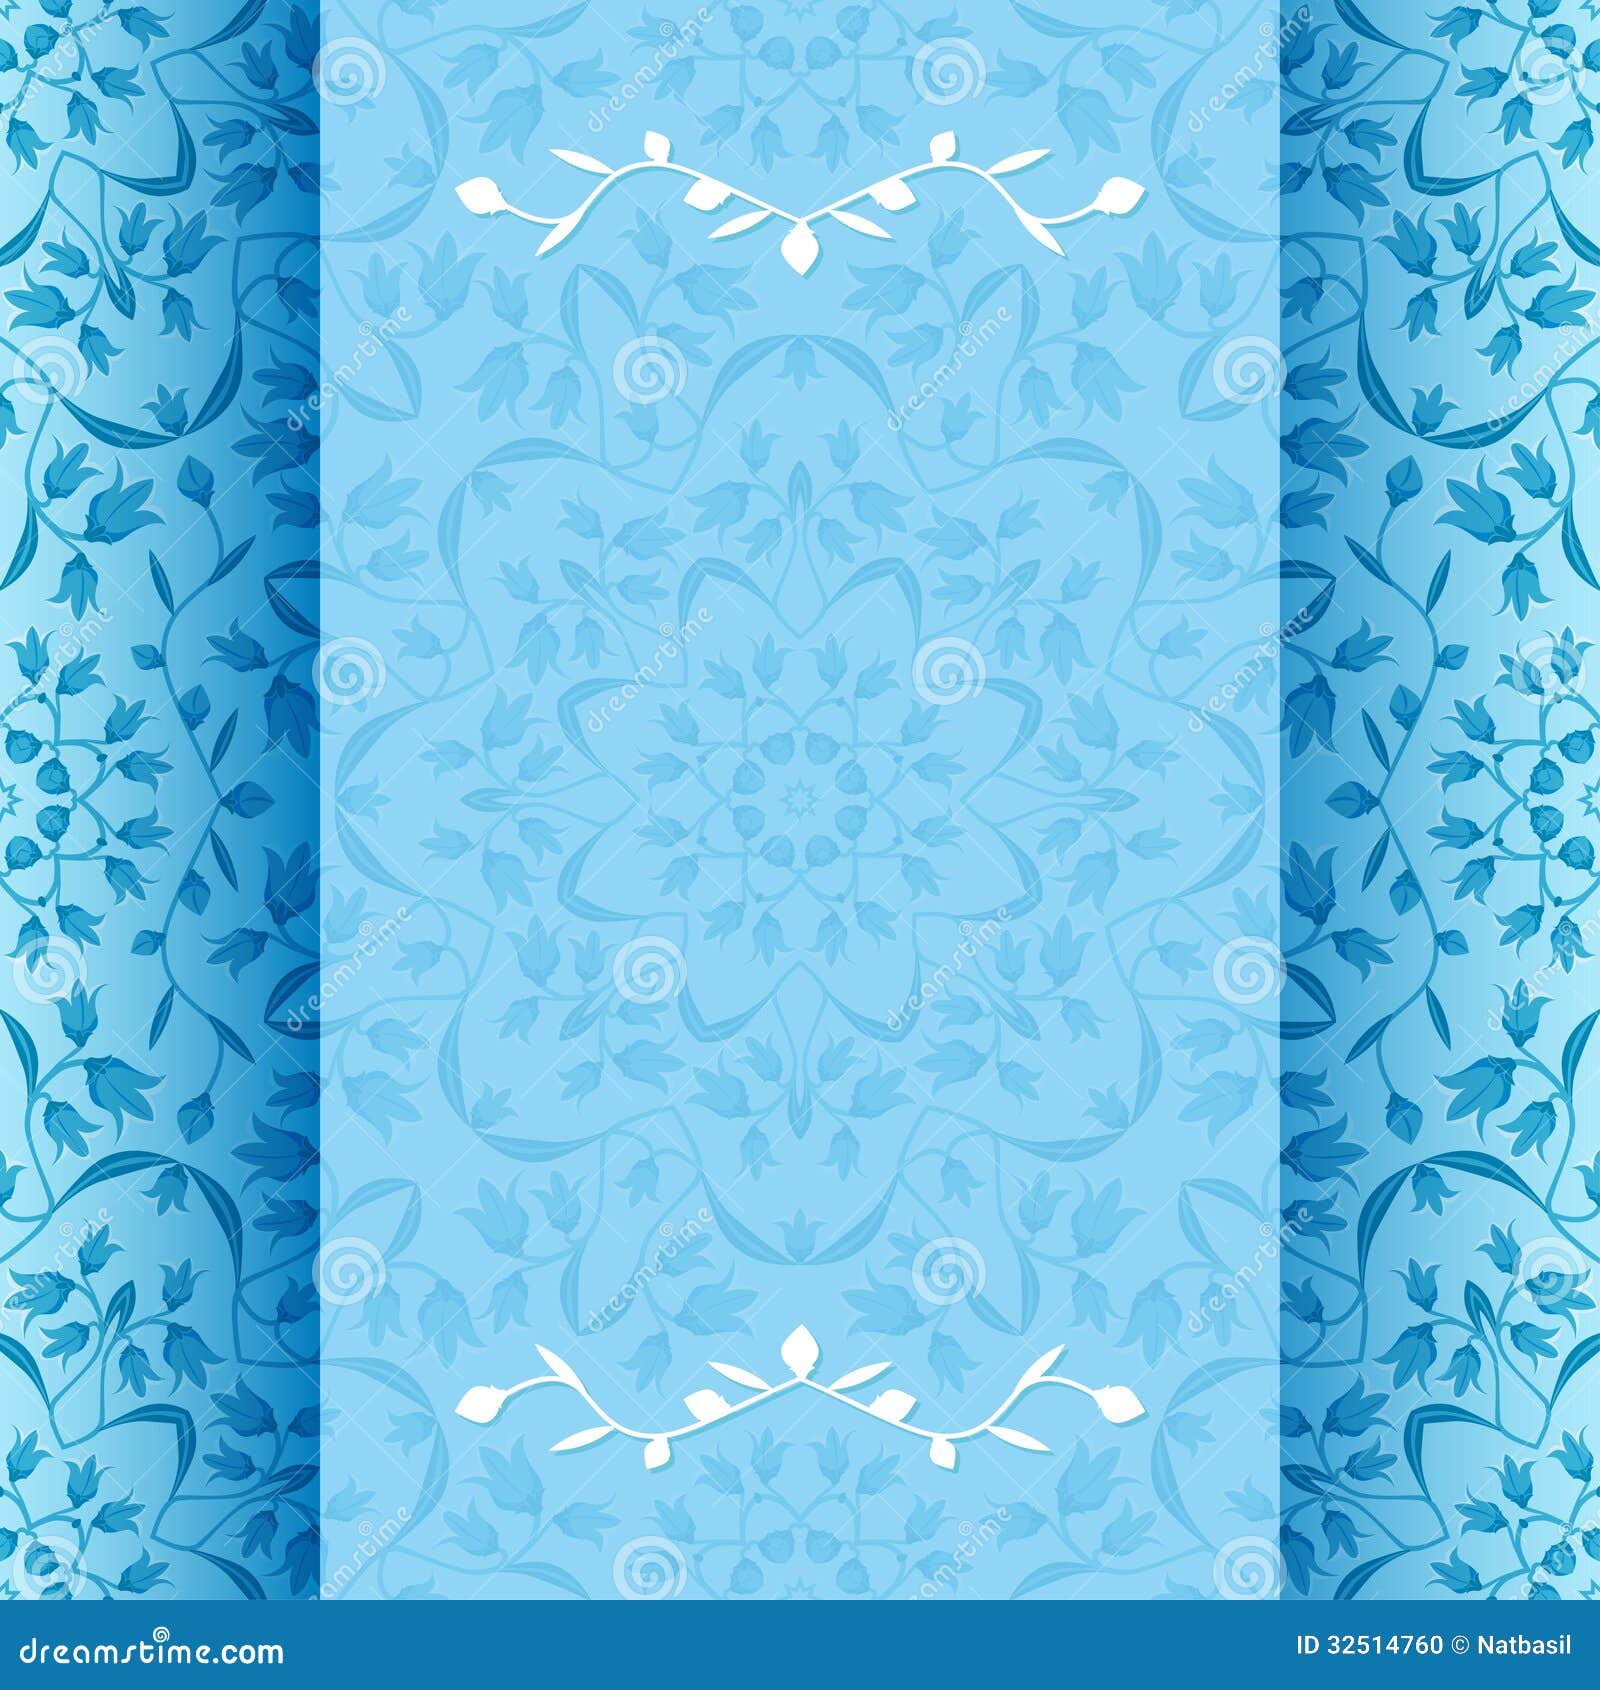 Fresh 70 Card Background Blue